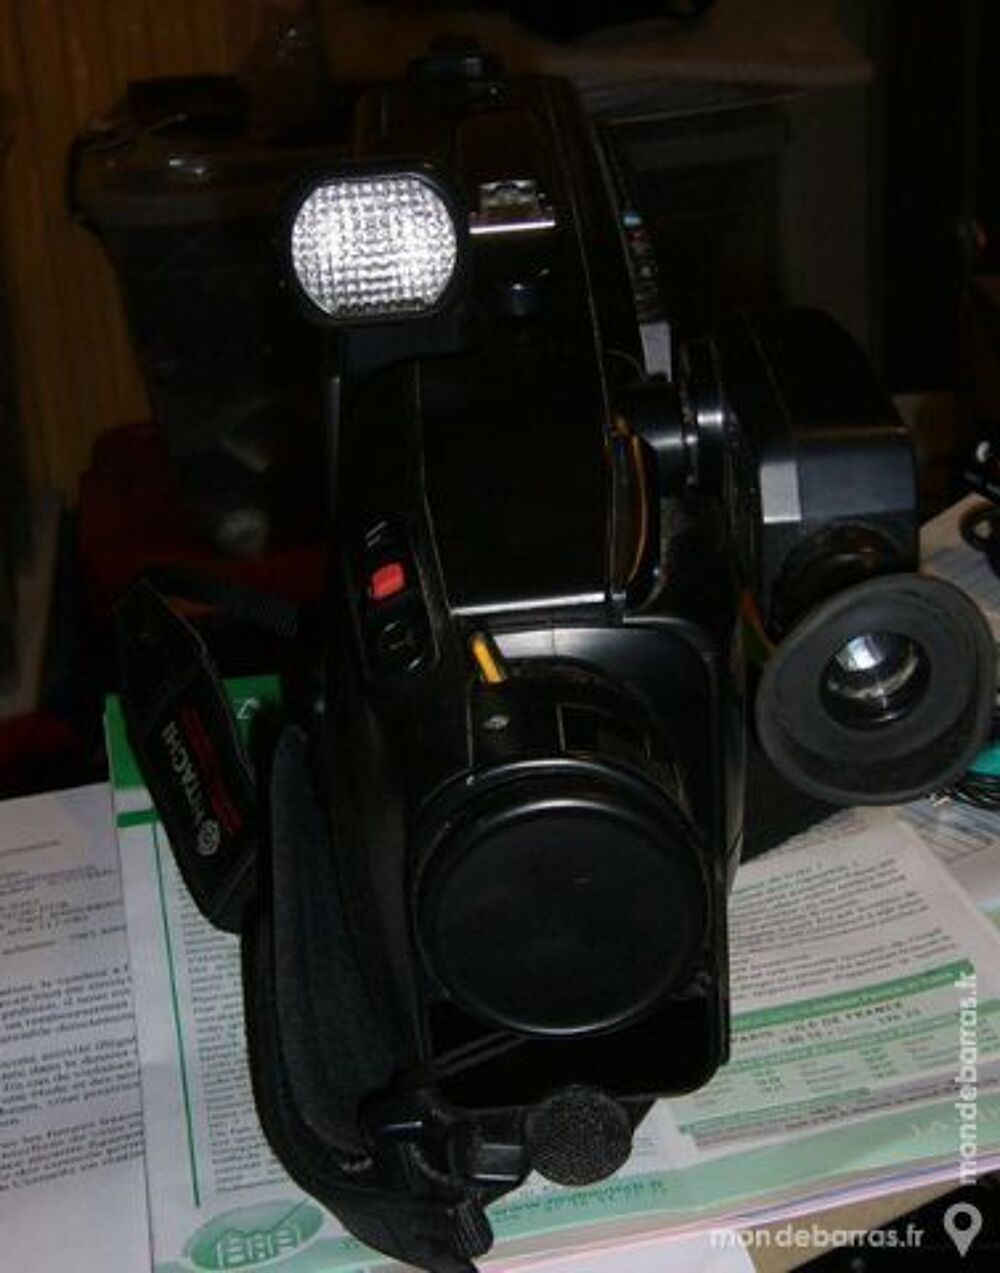 cam&eacute;scope hitachi VHS VM-2400s &agrave; r&eacute;gler Photos/Video/TV